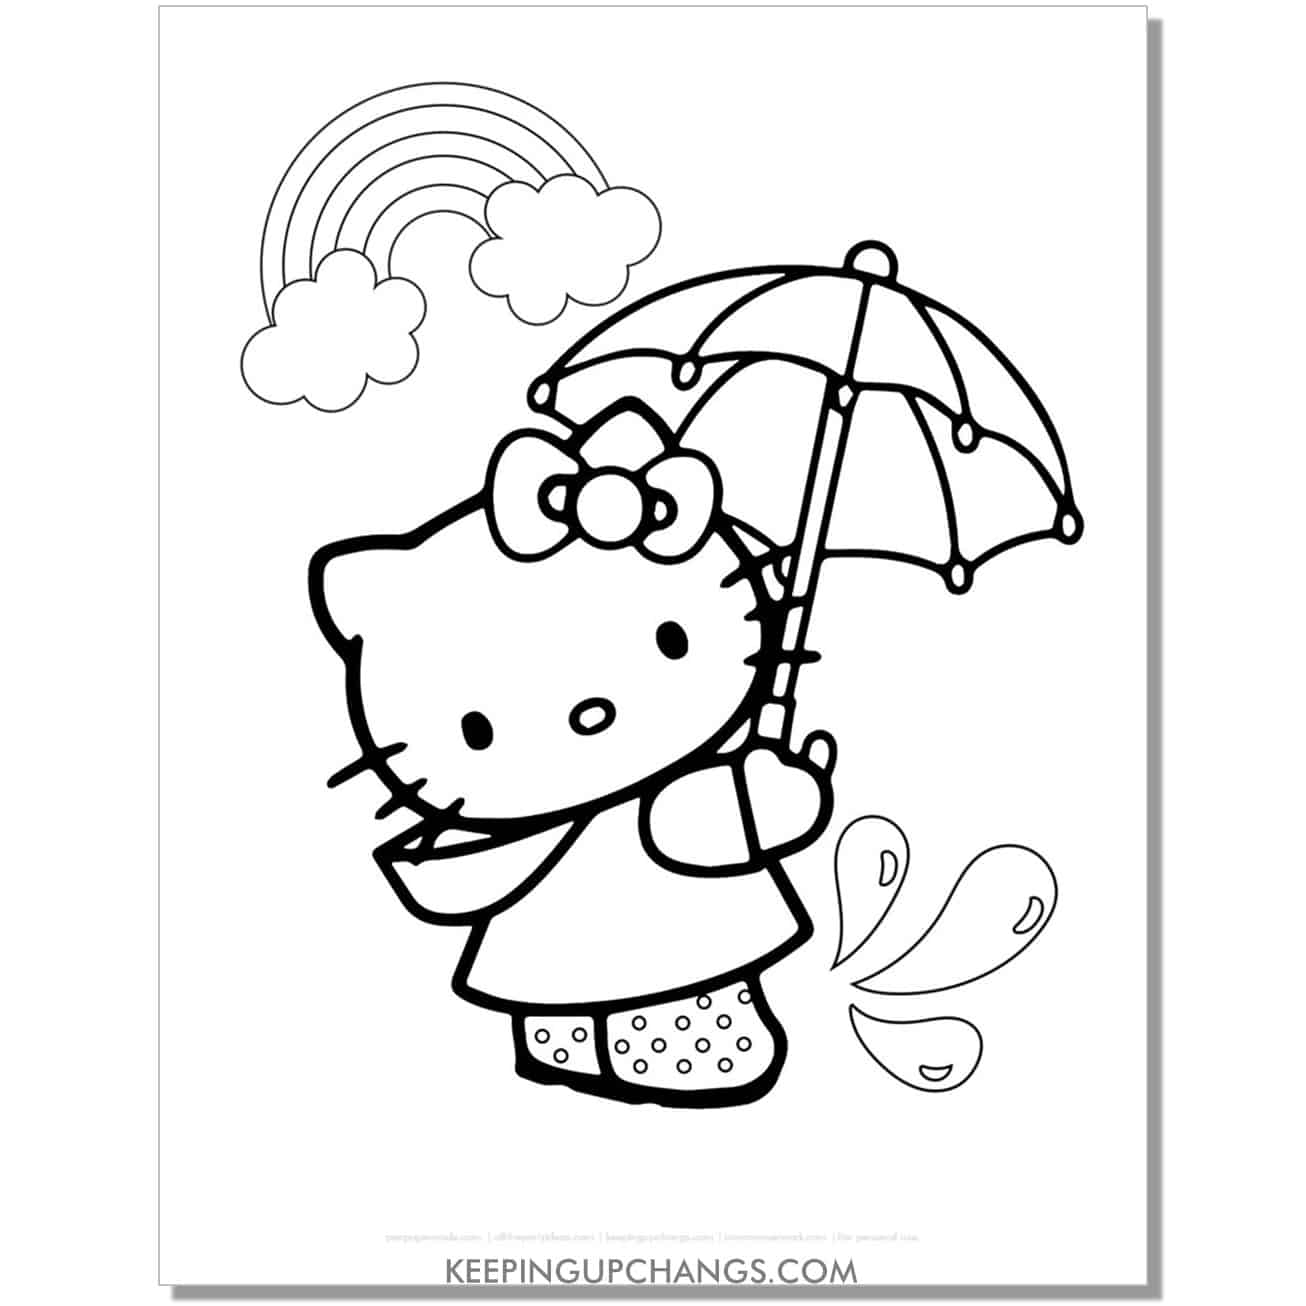 hello kitty with umbrella, rain coat, boots, rainbow coloring page.